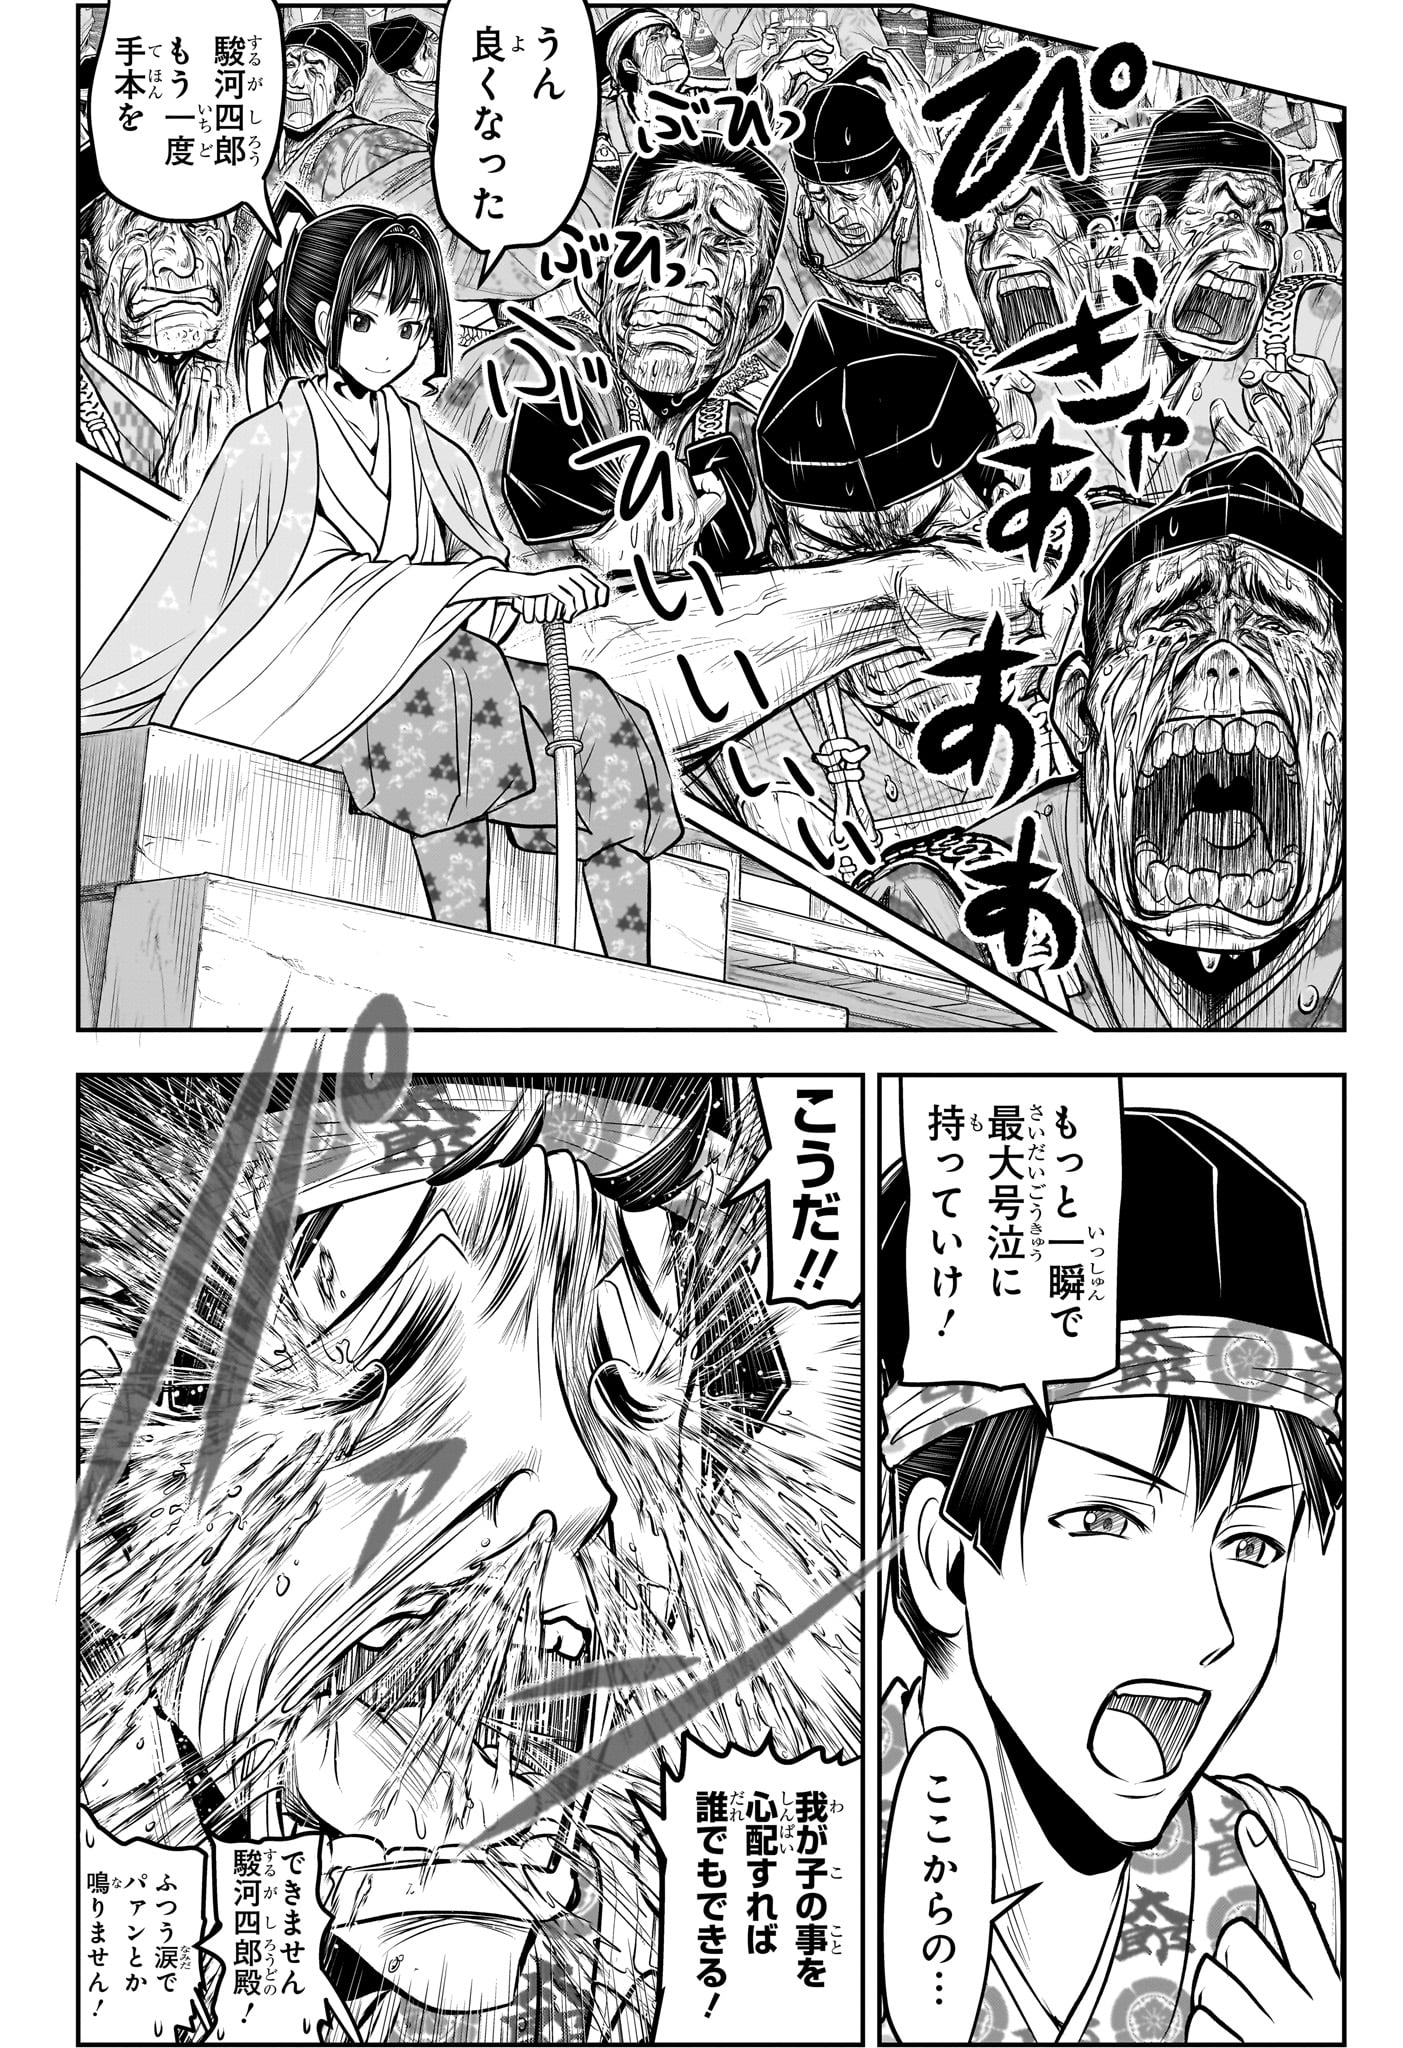 Nige Jouzu no Wakagimi - Chapter 149 - Page 18